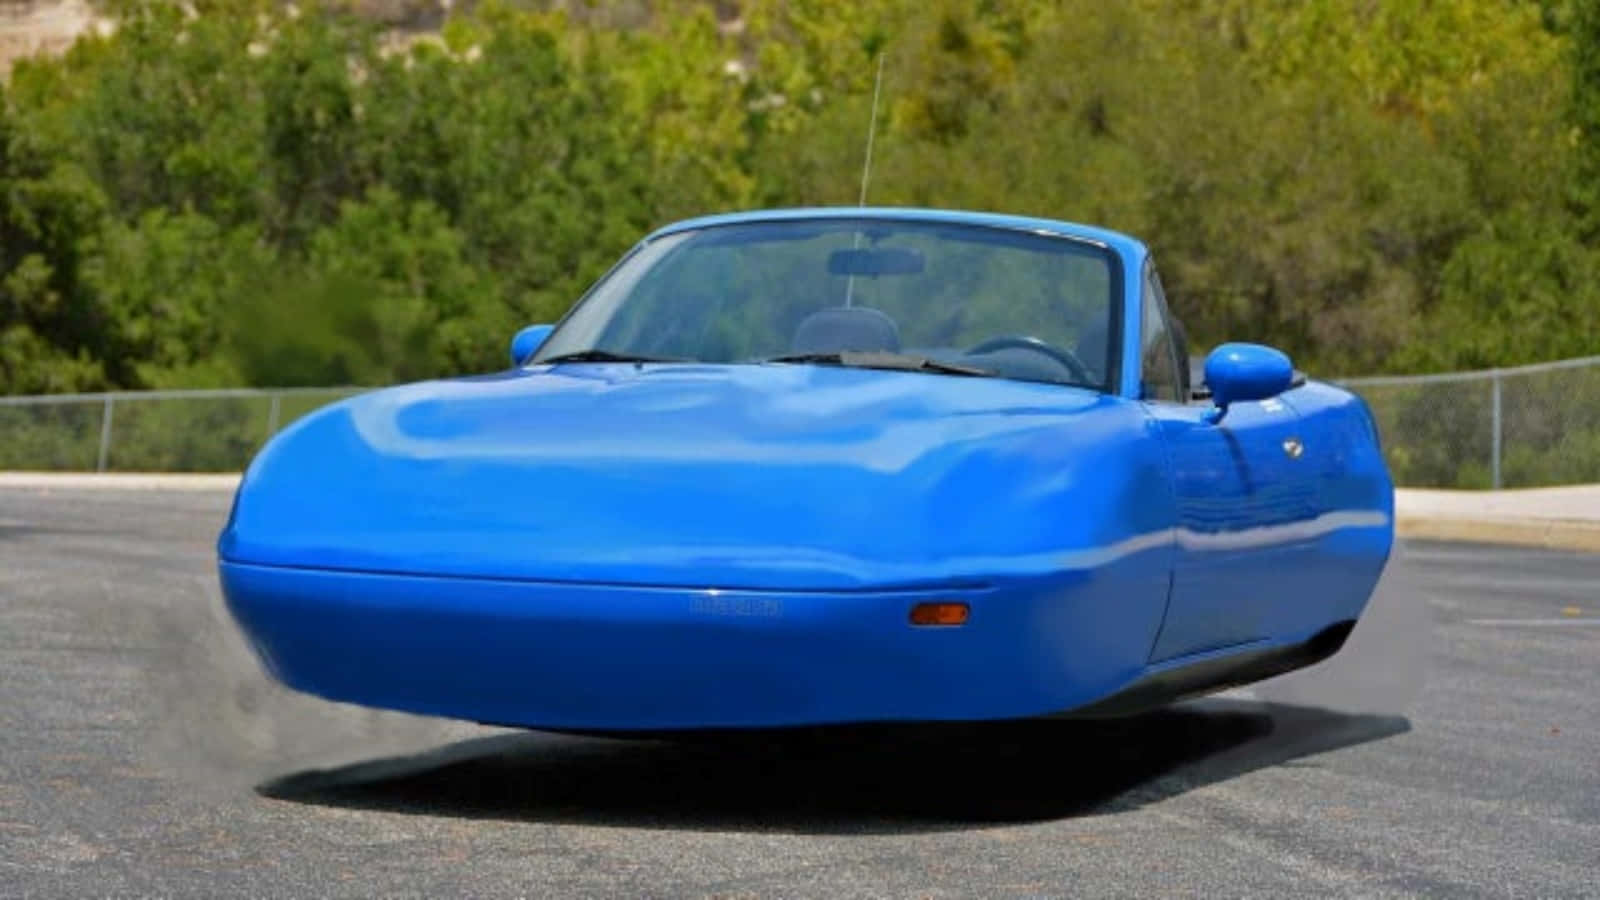 Enblå Bil Med En Motor På Den